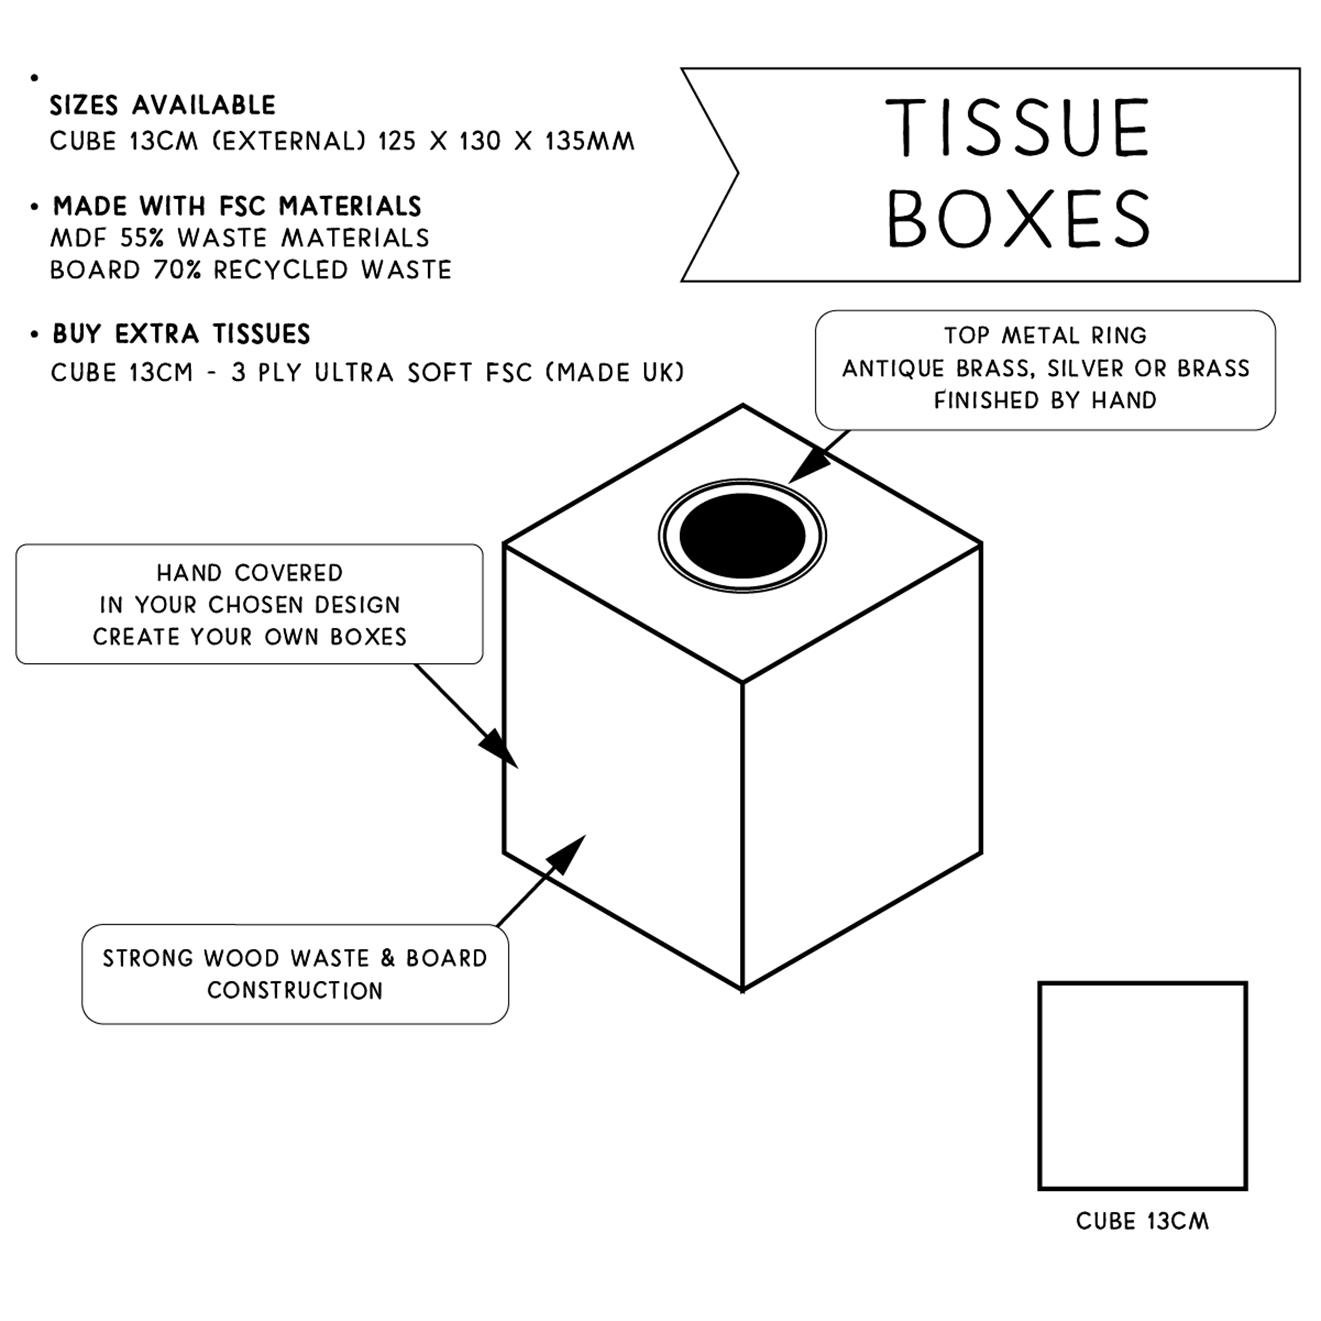 Classic Tissue Boxes